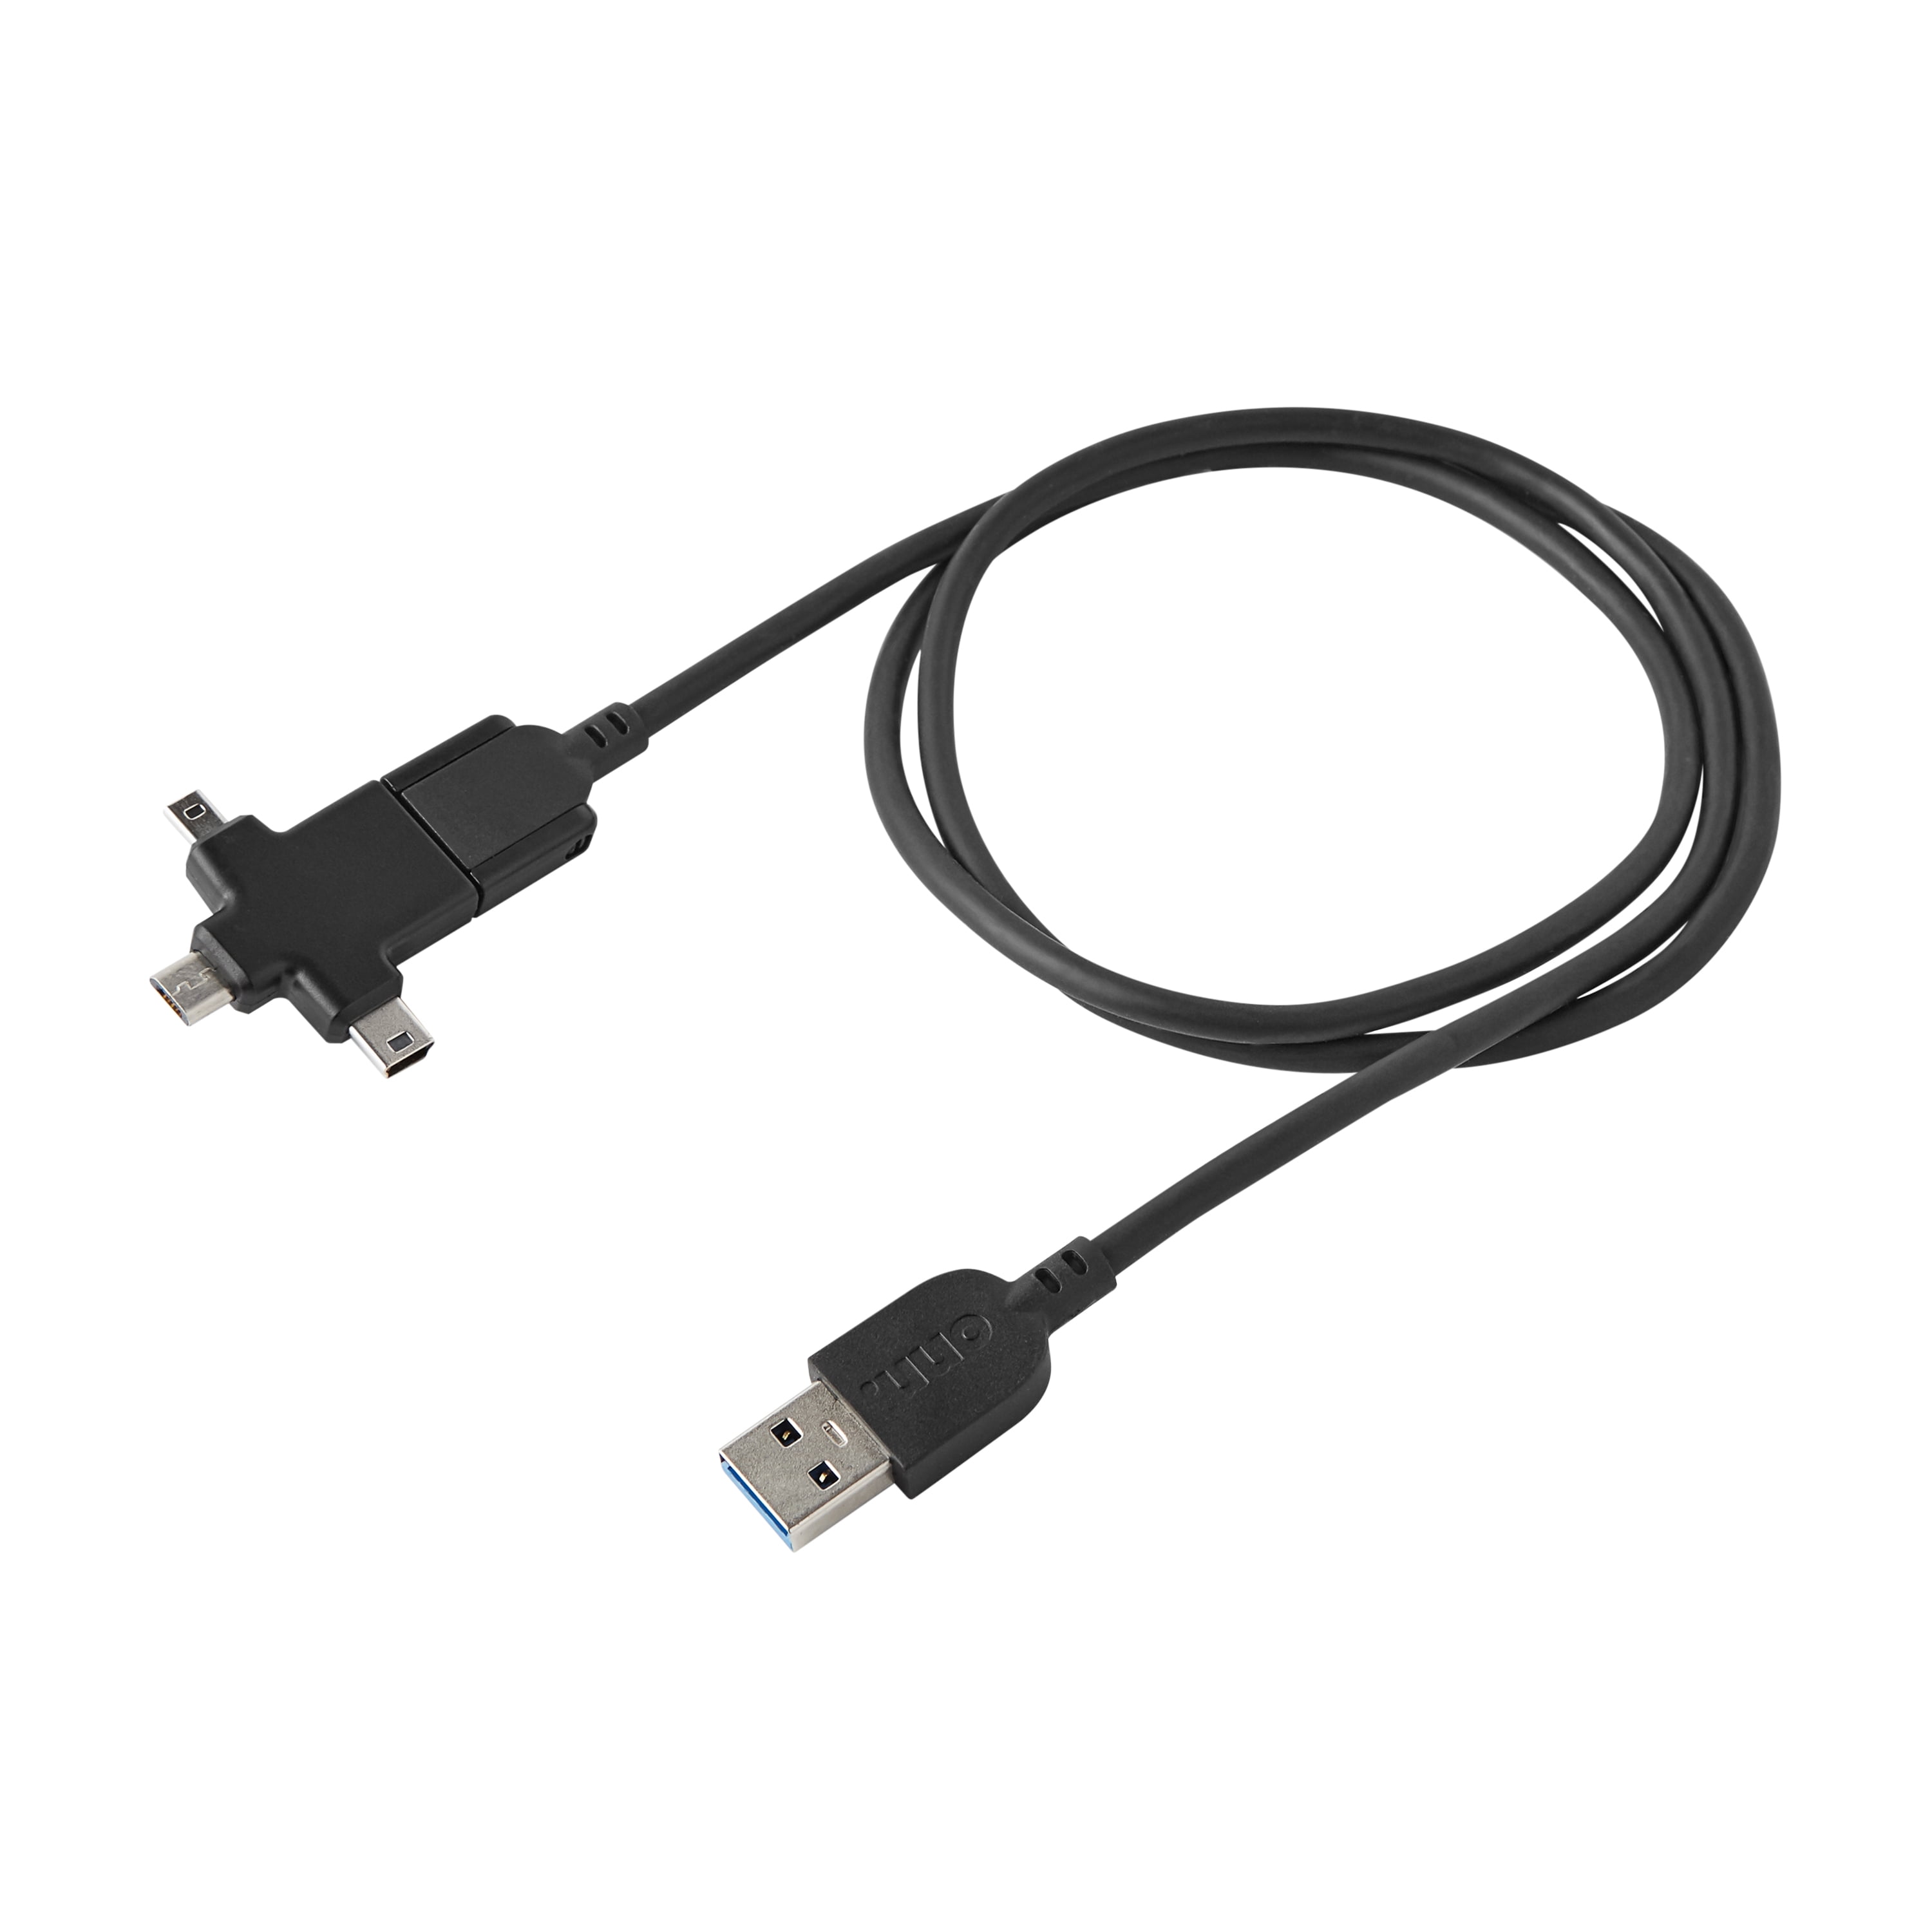 Onn. USB Universal Multi-Connector Cable with Usb-c, Micro-USB, Mini-USB and Mini-B Connectors, 3